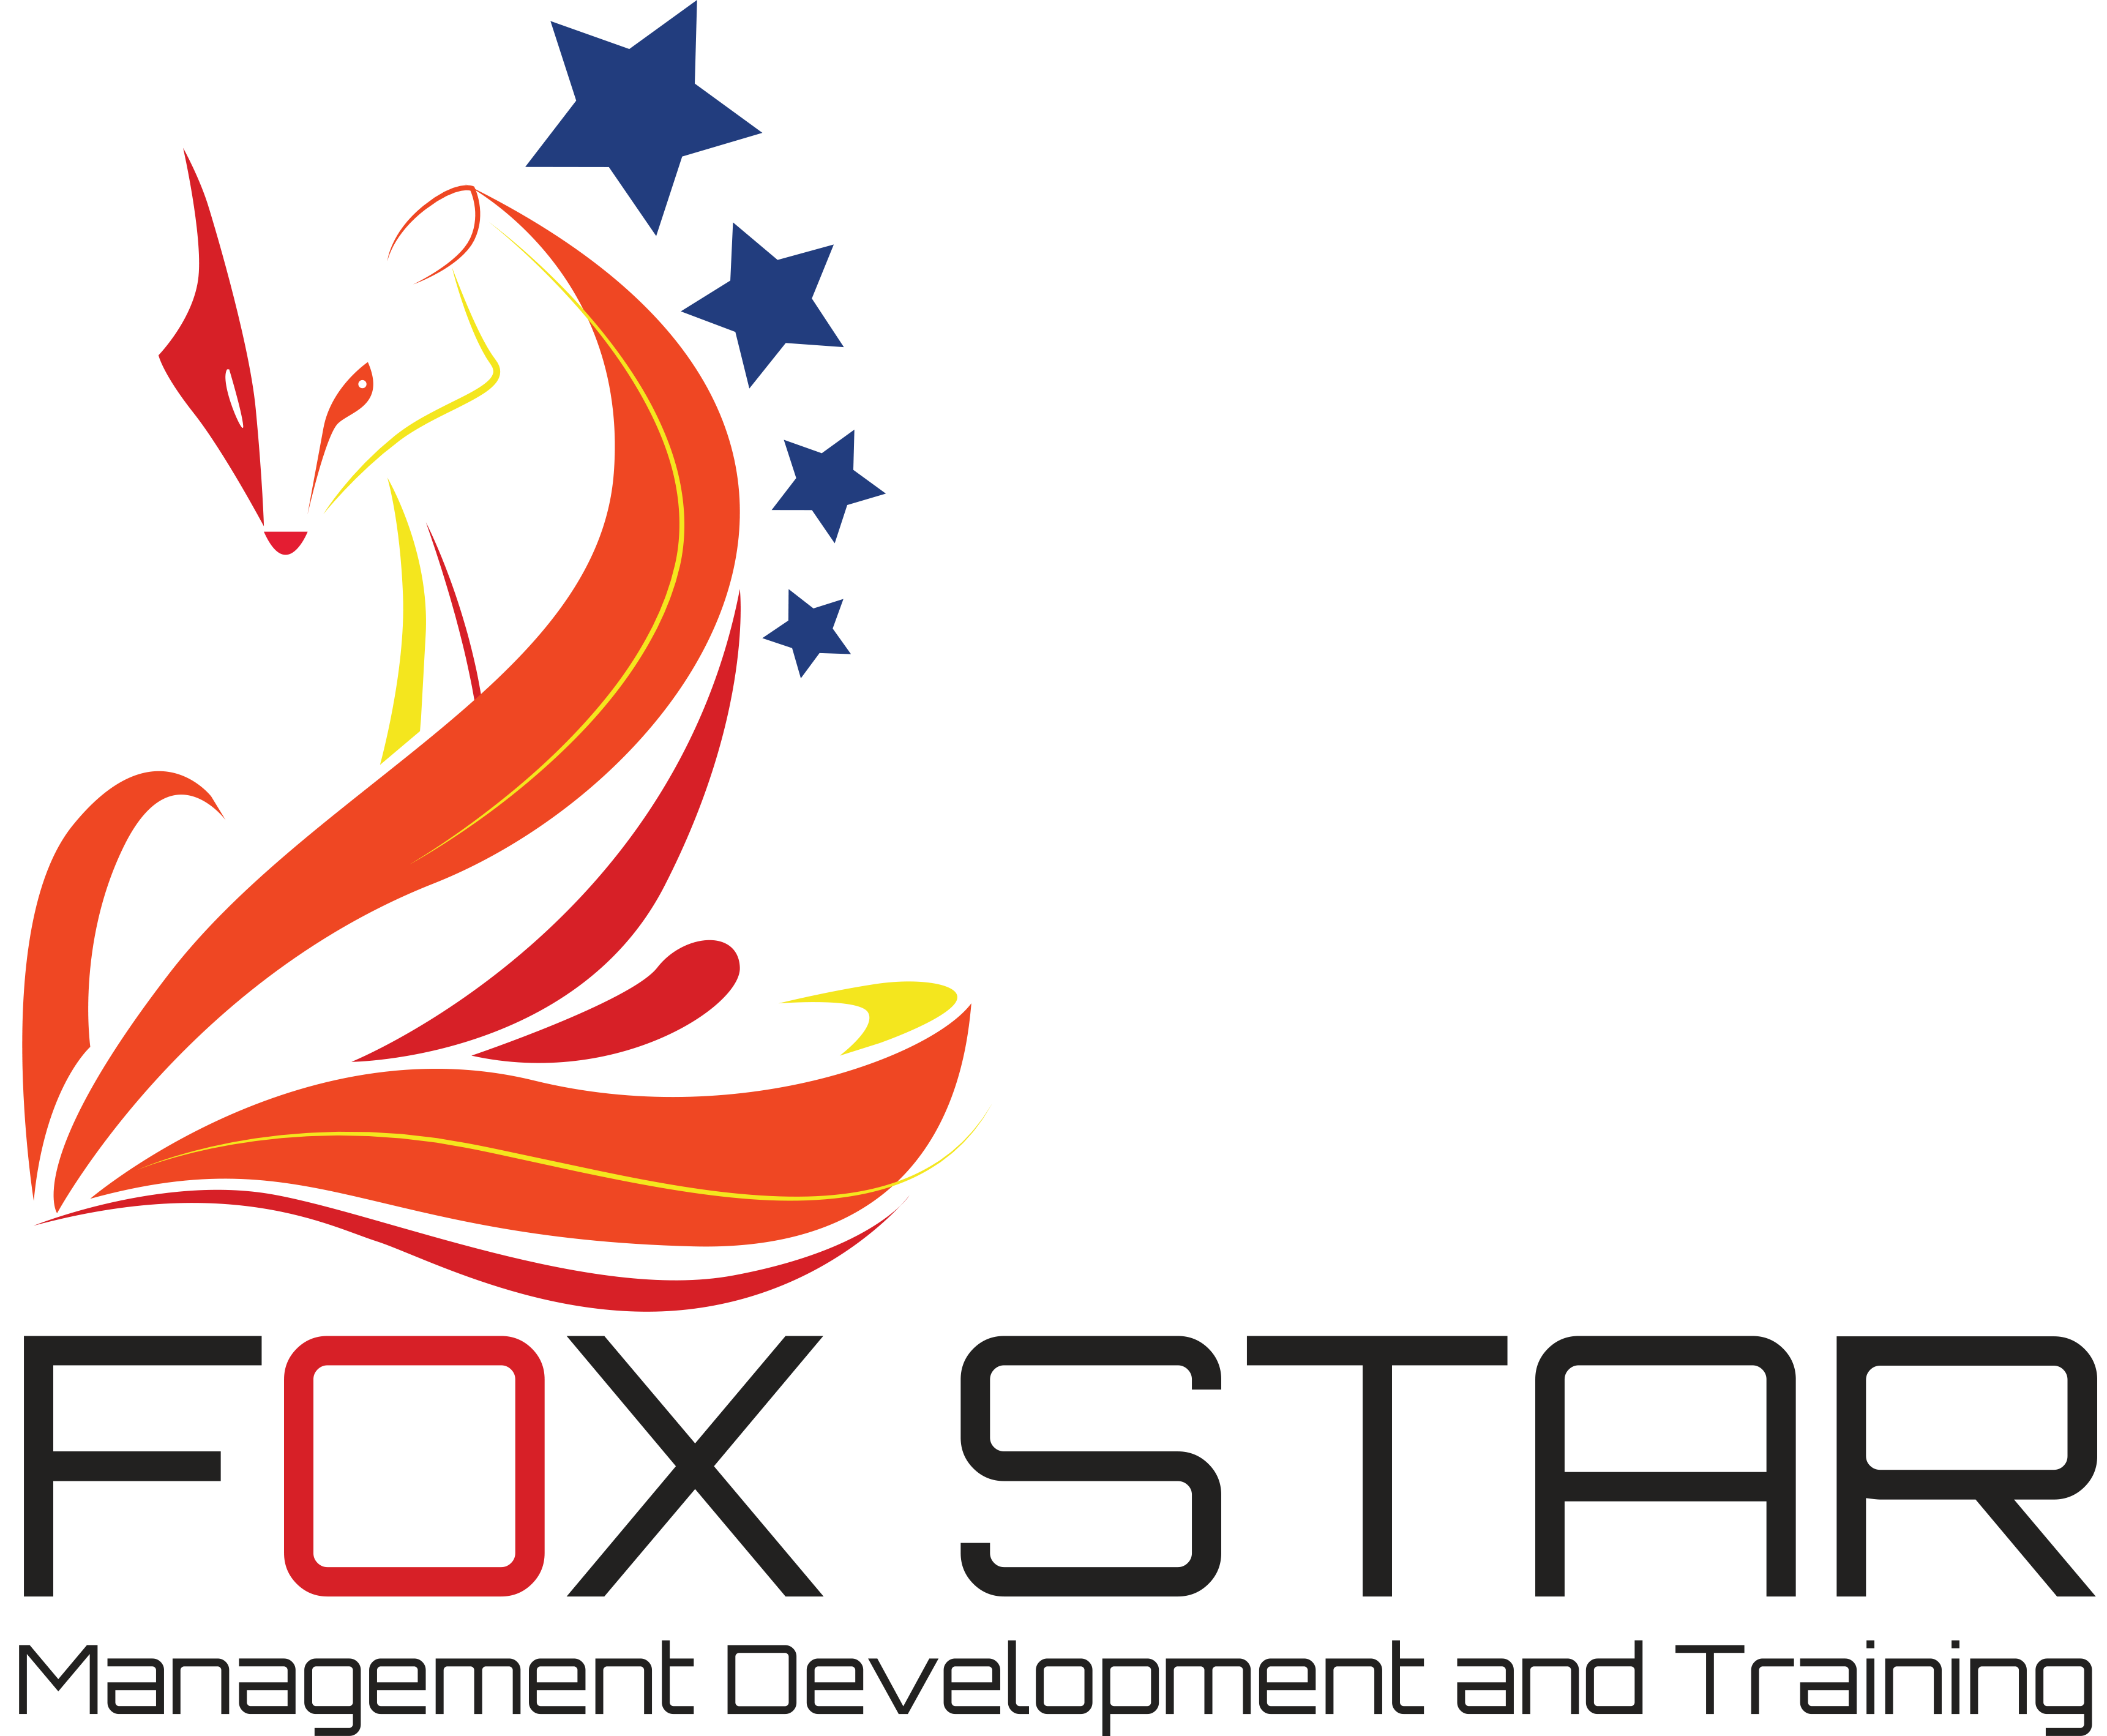 Fox Star Management Development & Training Logo